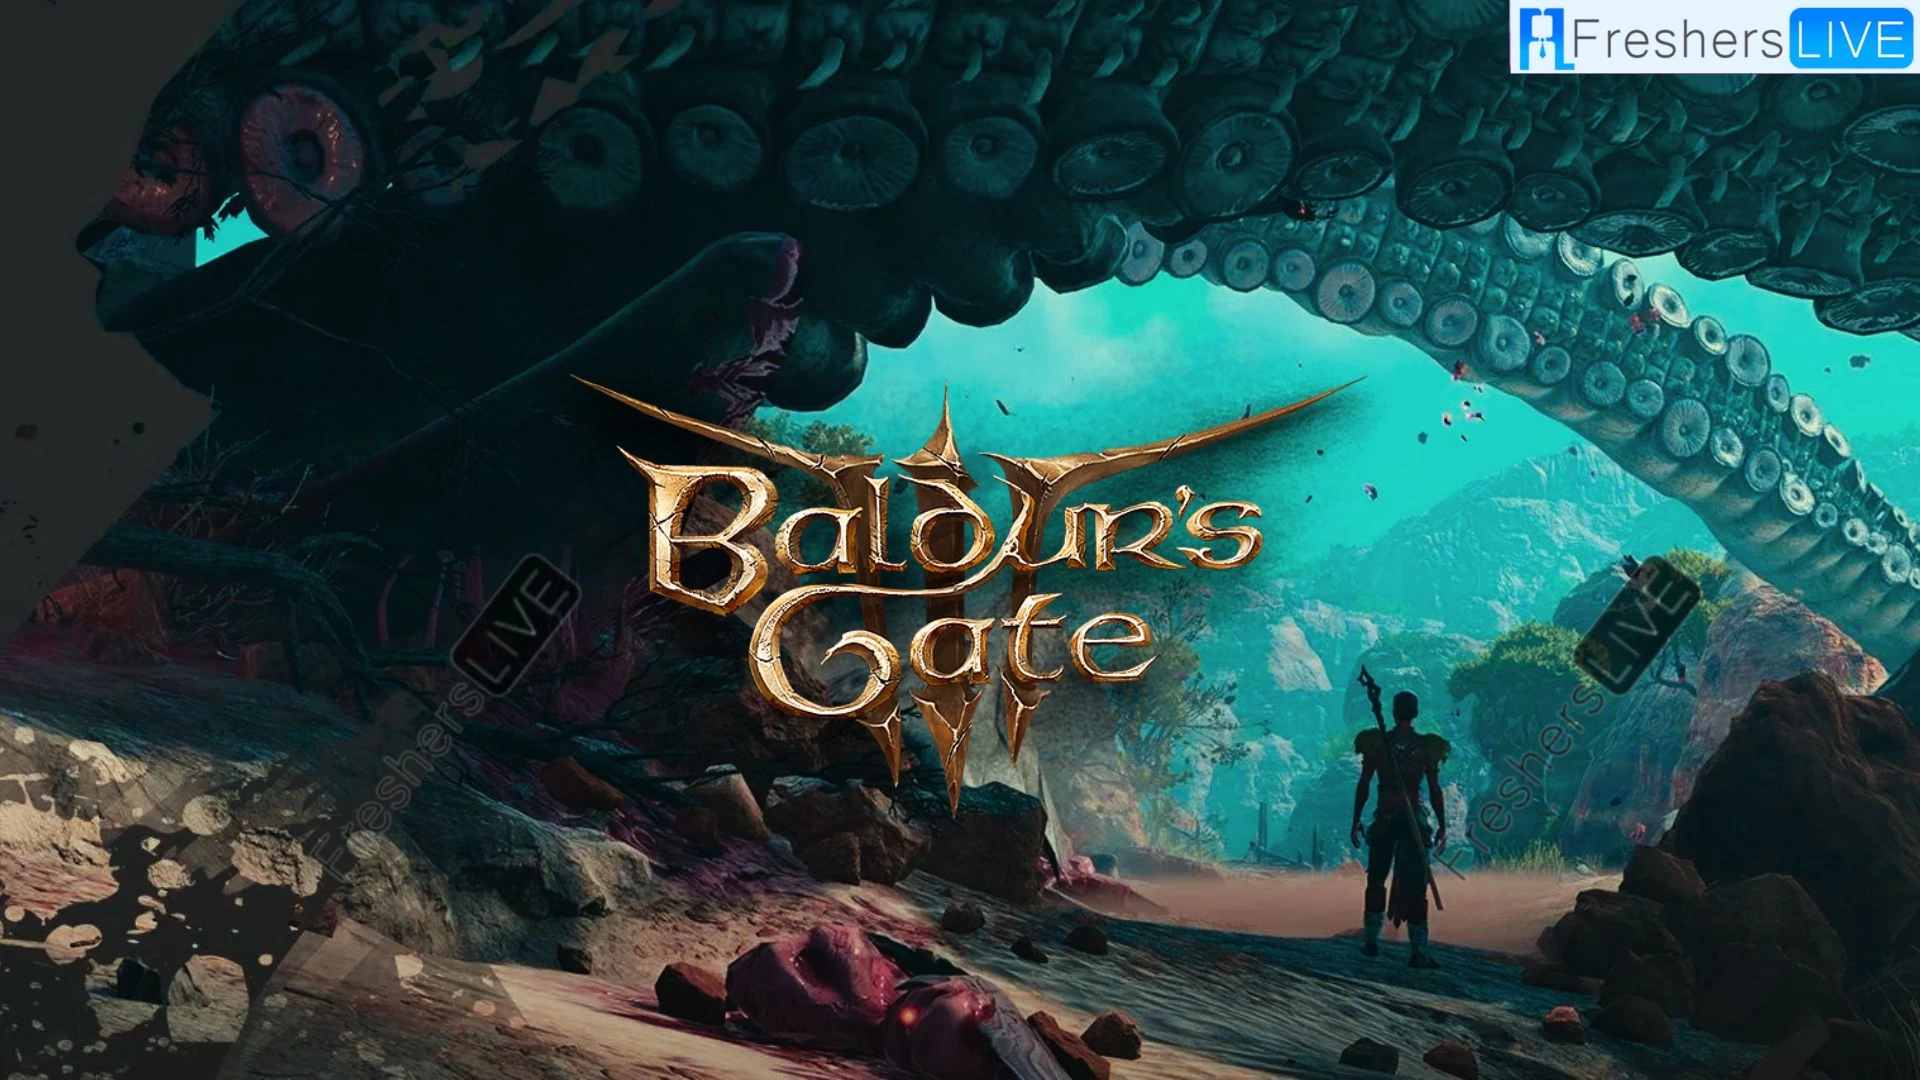 Baldurs Gate 3 Minsc Location, Where to Find Minsc in Baldurs Gate 3? How to Recruit Minsc in Baldurs Gate 3?